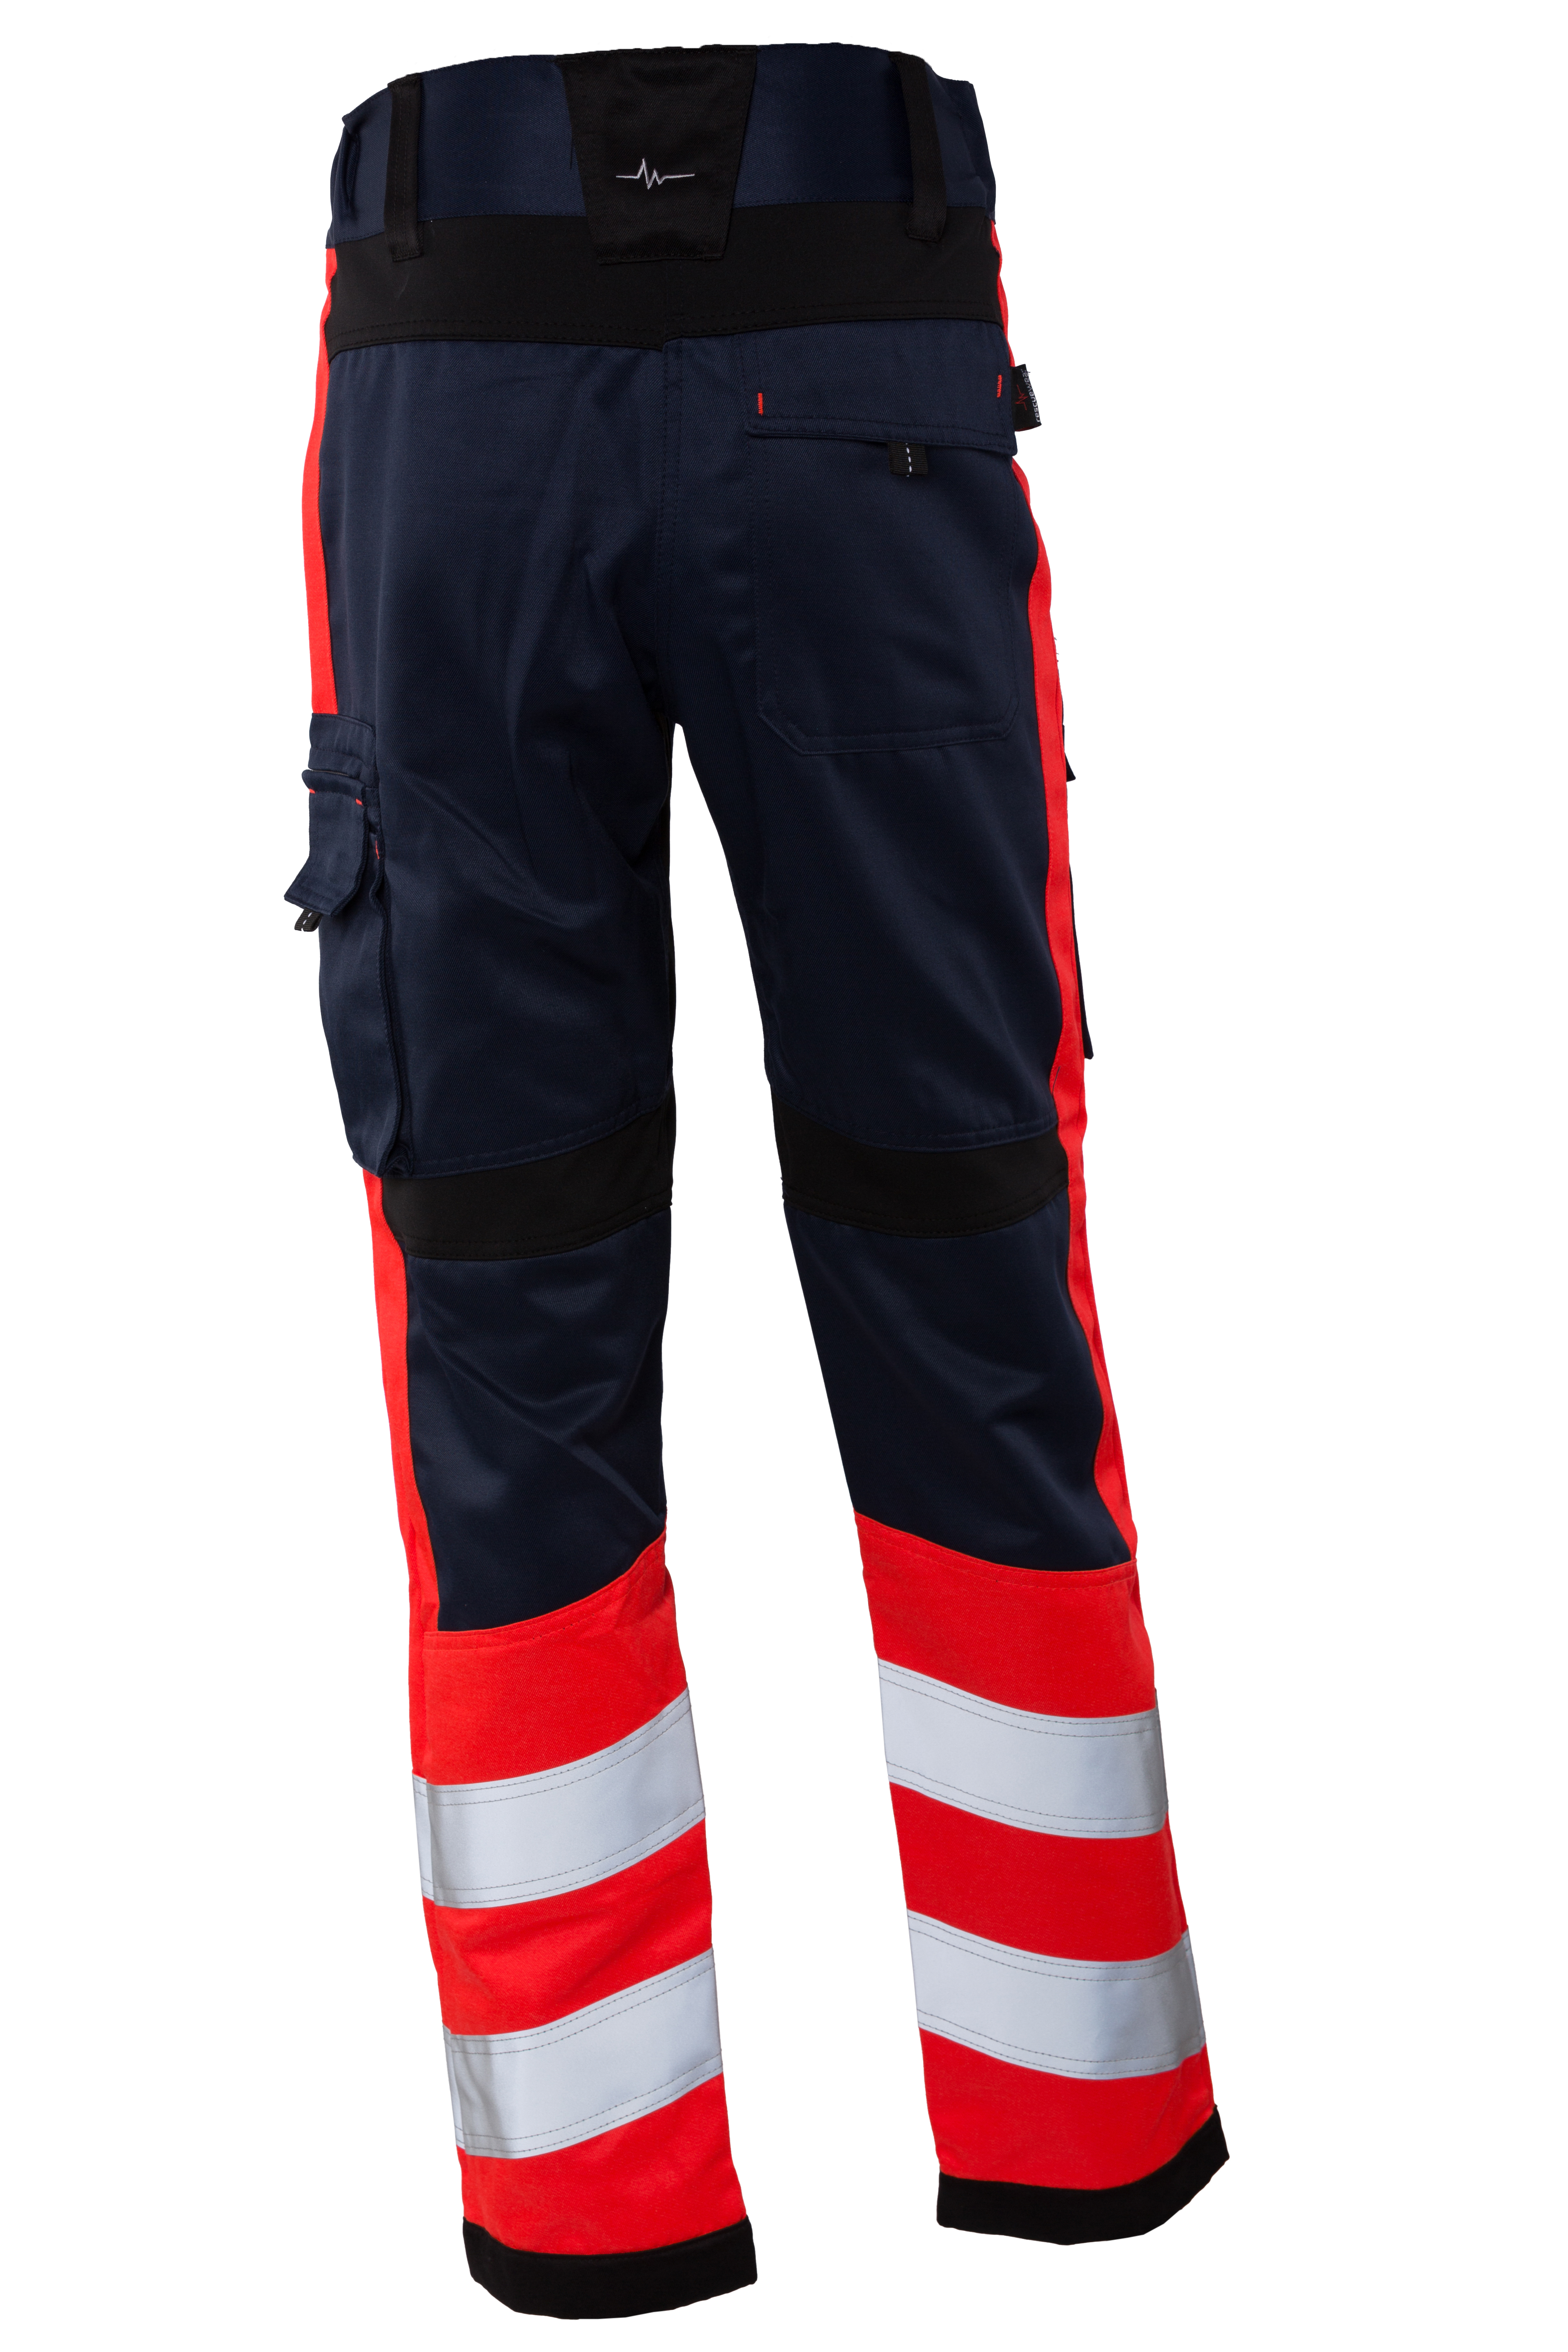 Rescuewear Damen Hose Stretch HiVis Klasse 1 Marineblau / Schwarz / Neon Rot  - 44